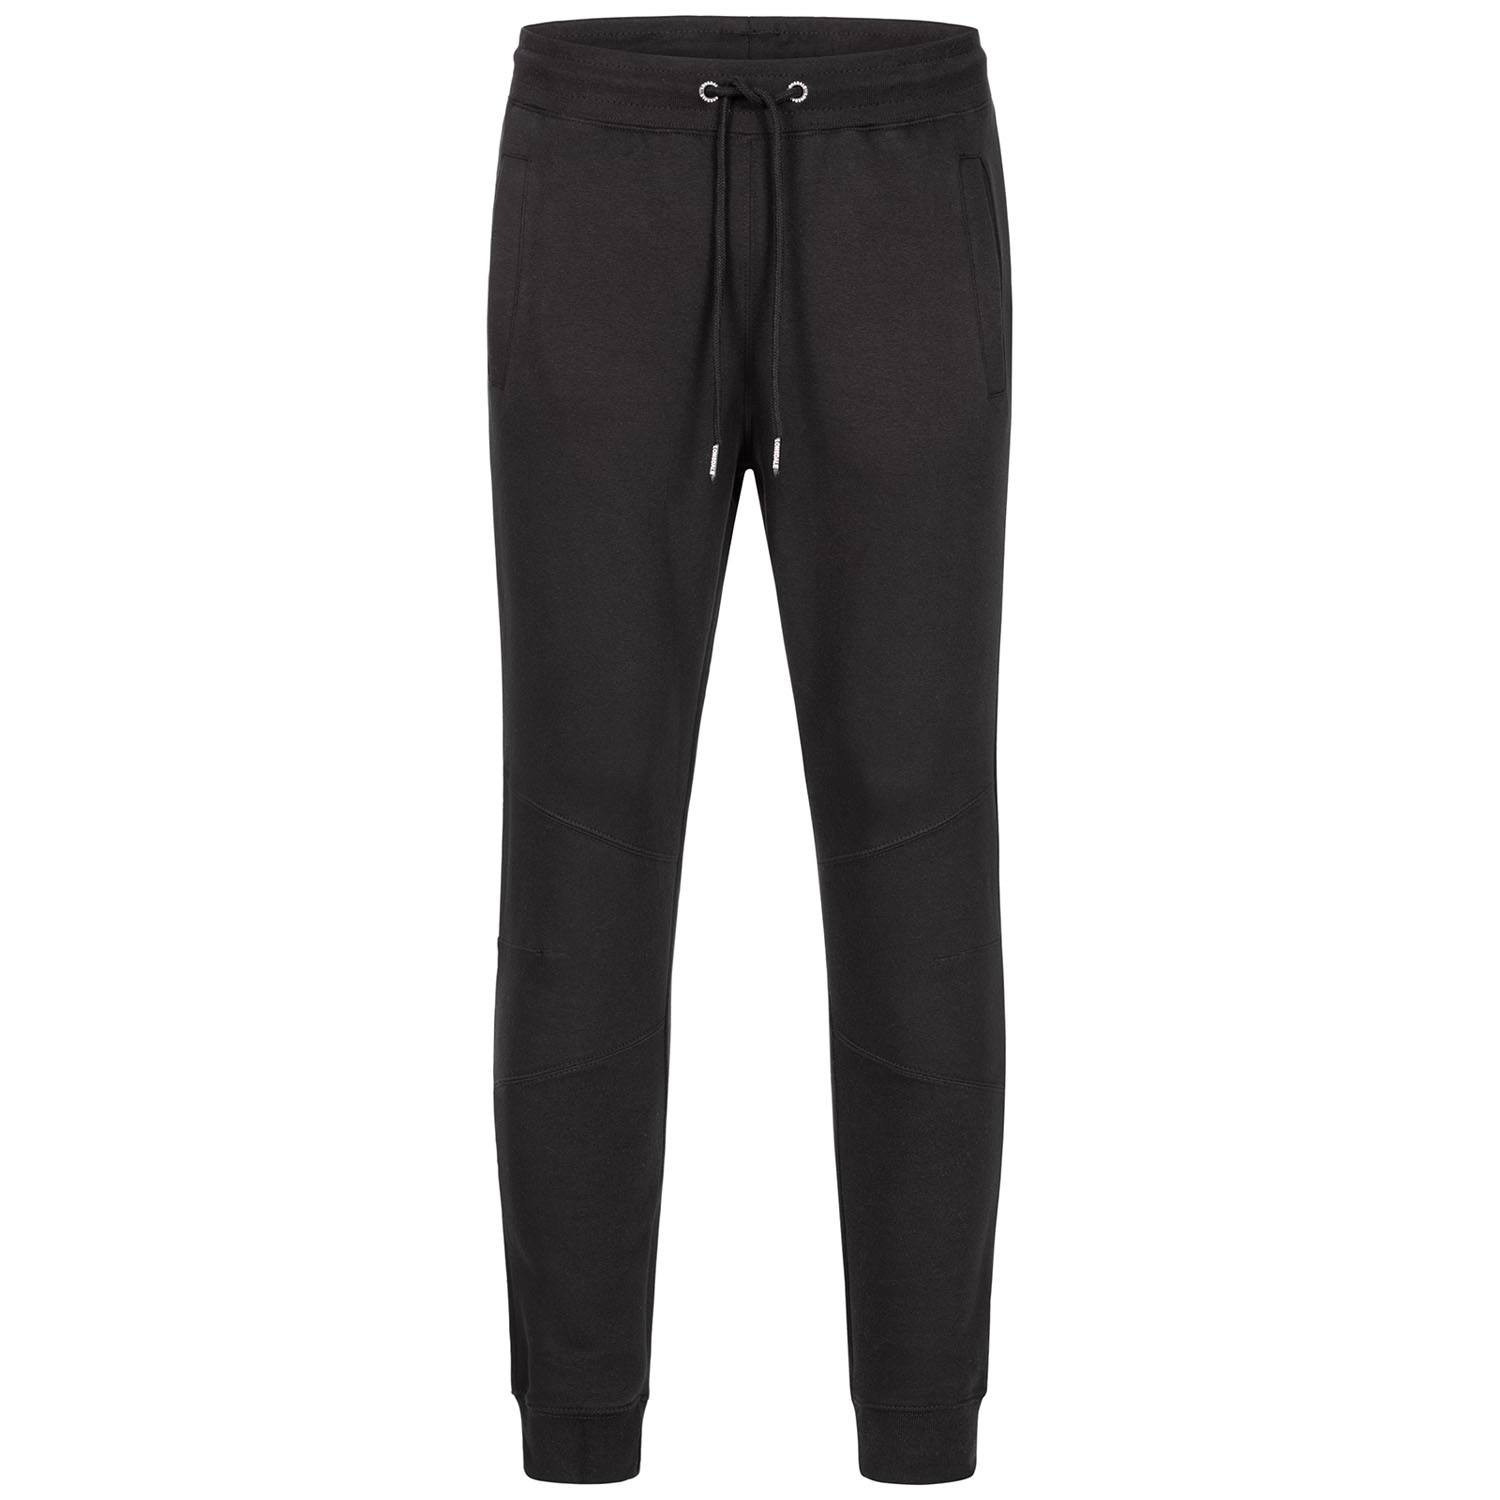 Lonsdale Jogging Pants, Wellingham, black-darkred, M